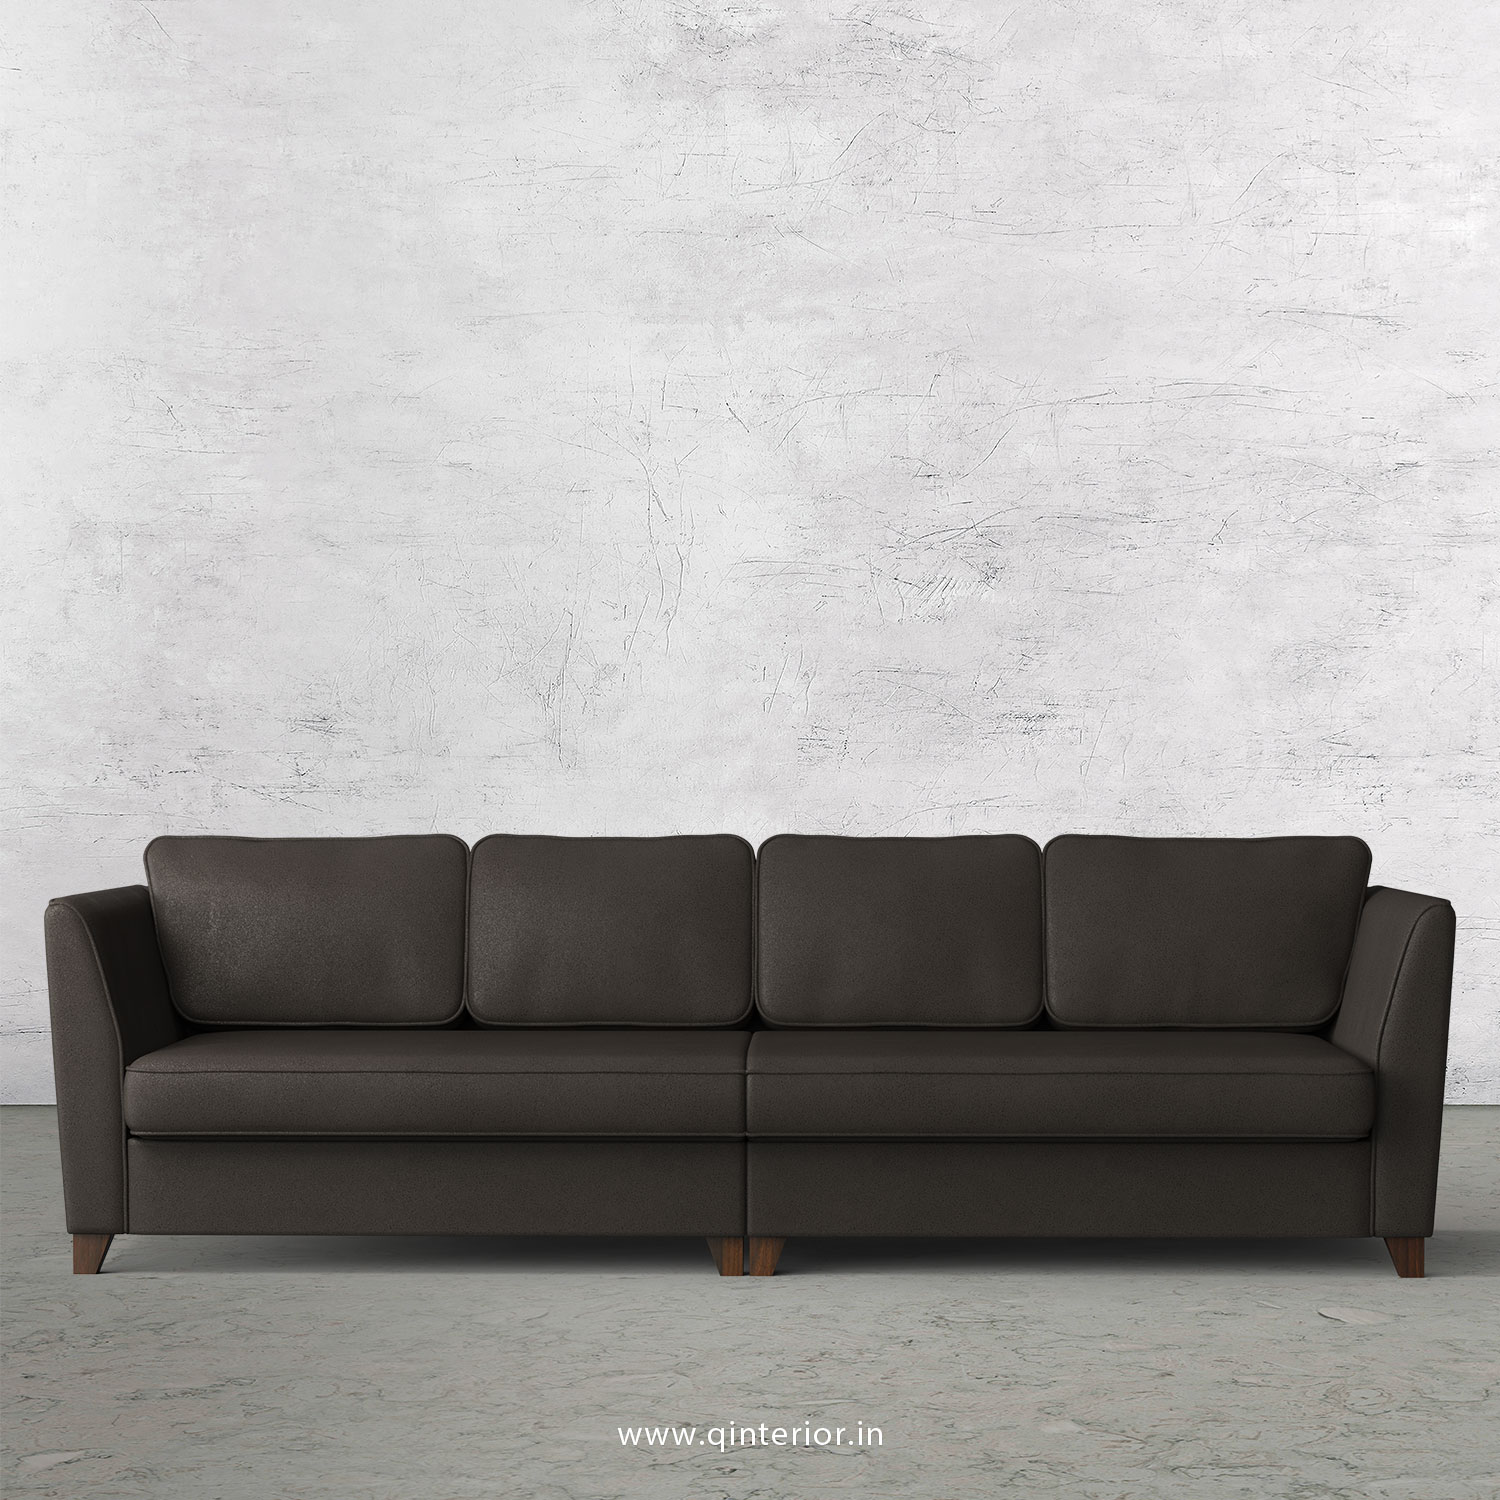 Kingstone 4 Seater Sofa in Fab Leather Fabric - SFA004 FL15